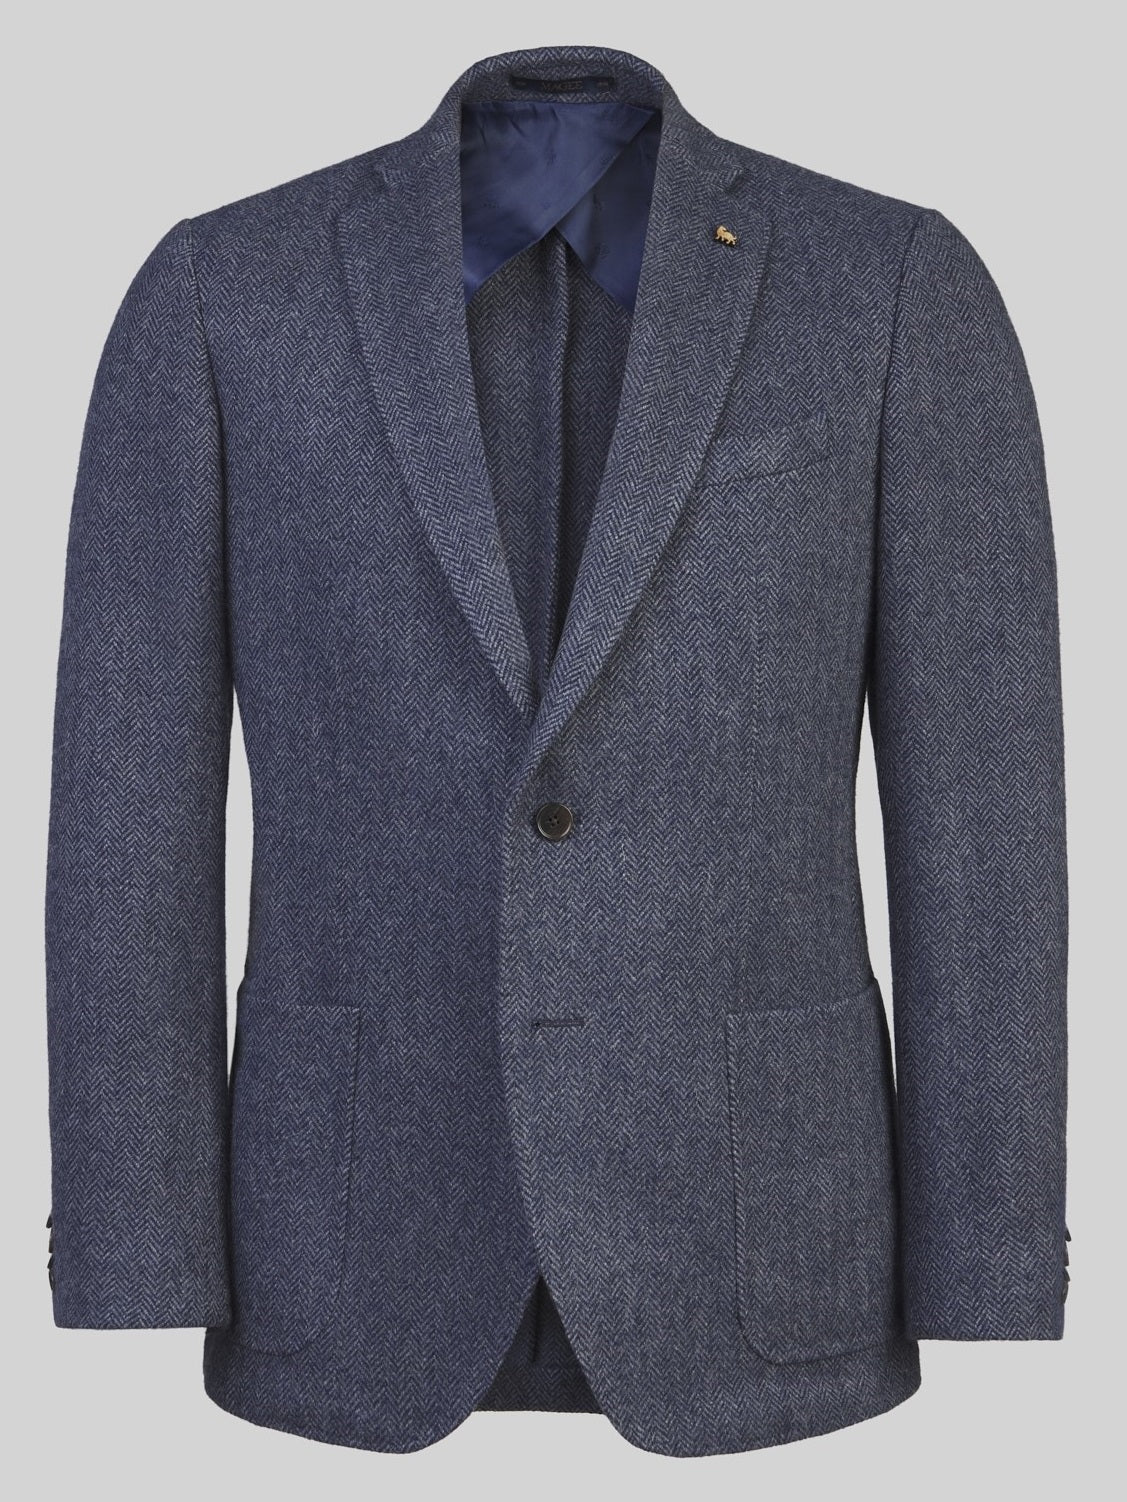 50% OFF - MAGEE Donegal Tweed Jacket - Easky Patch Pocket - Blue & Grey Herringbone - Size: 38 REG